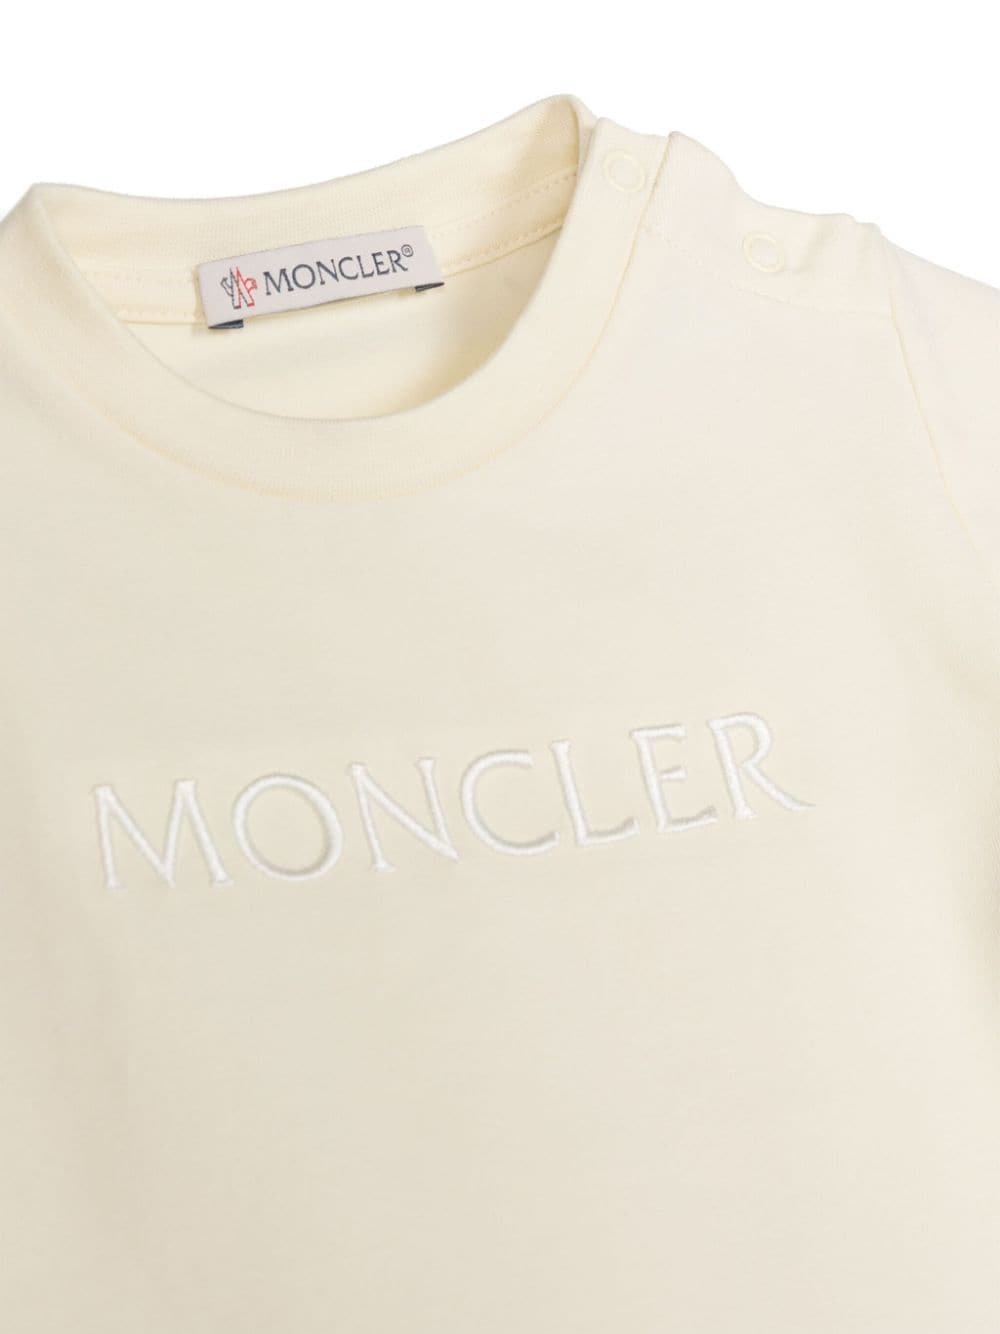 Moncler Enfant t-shirt con logo